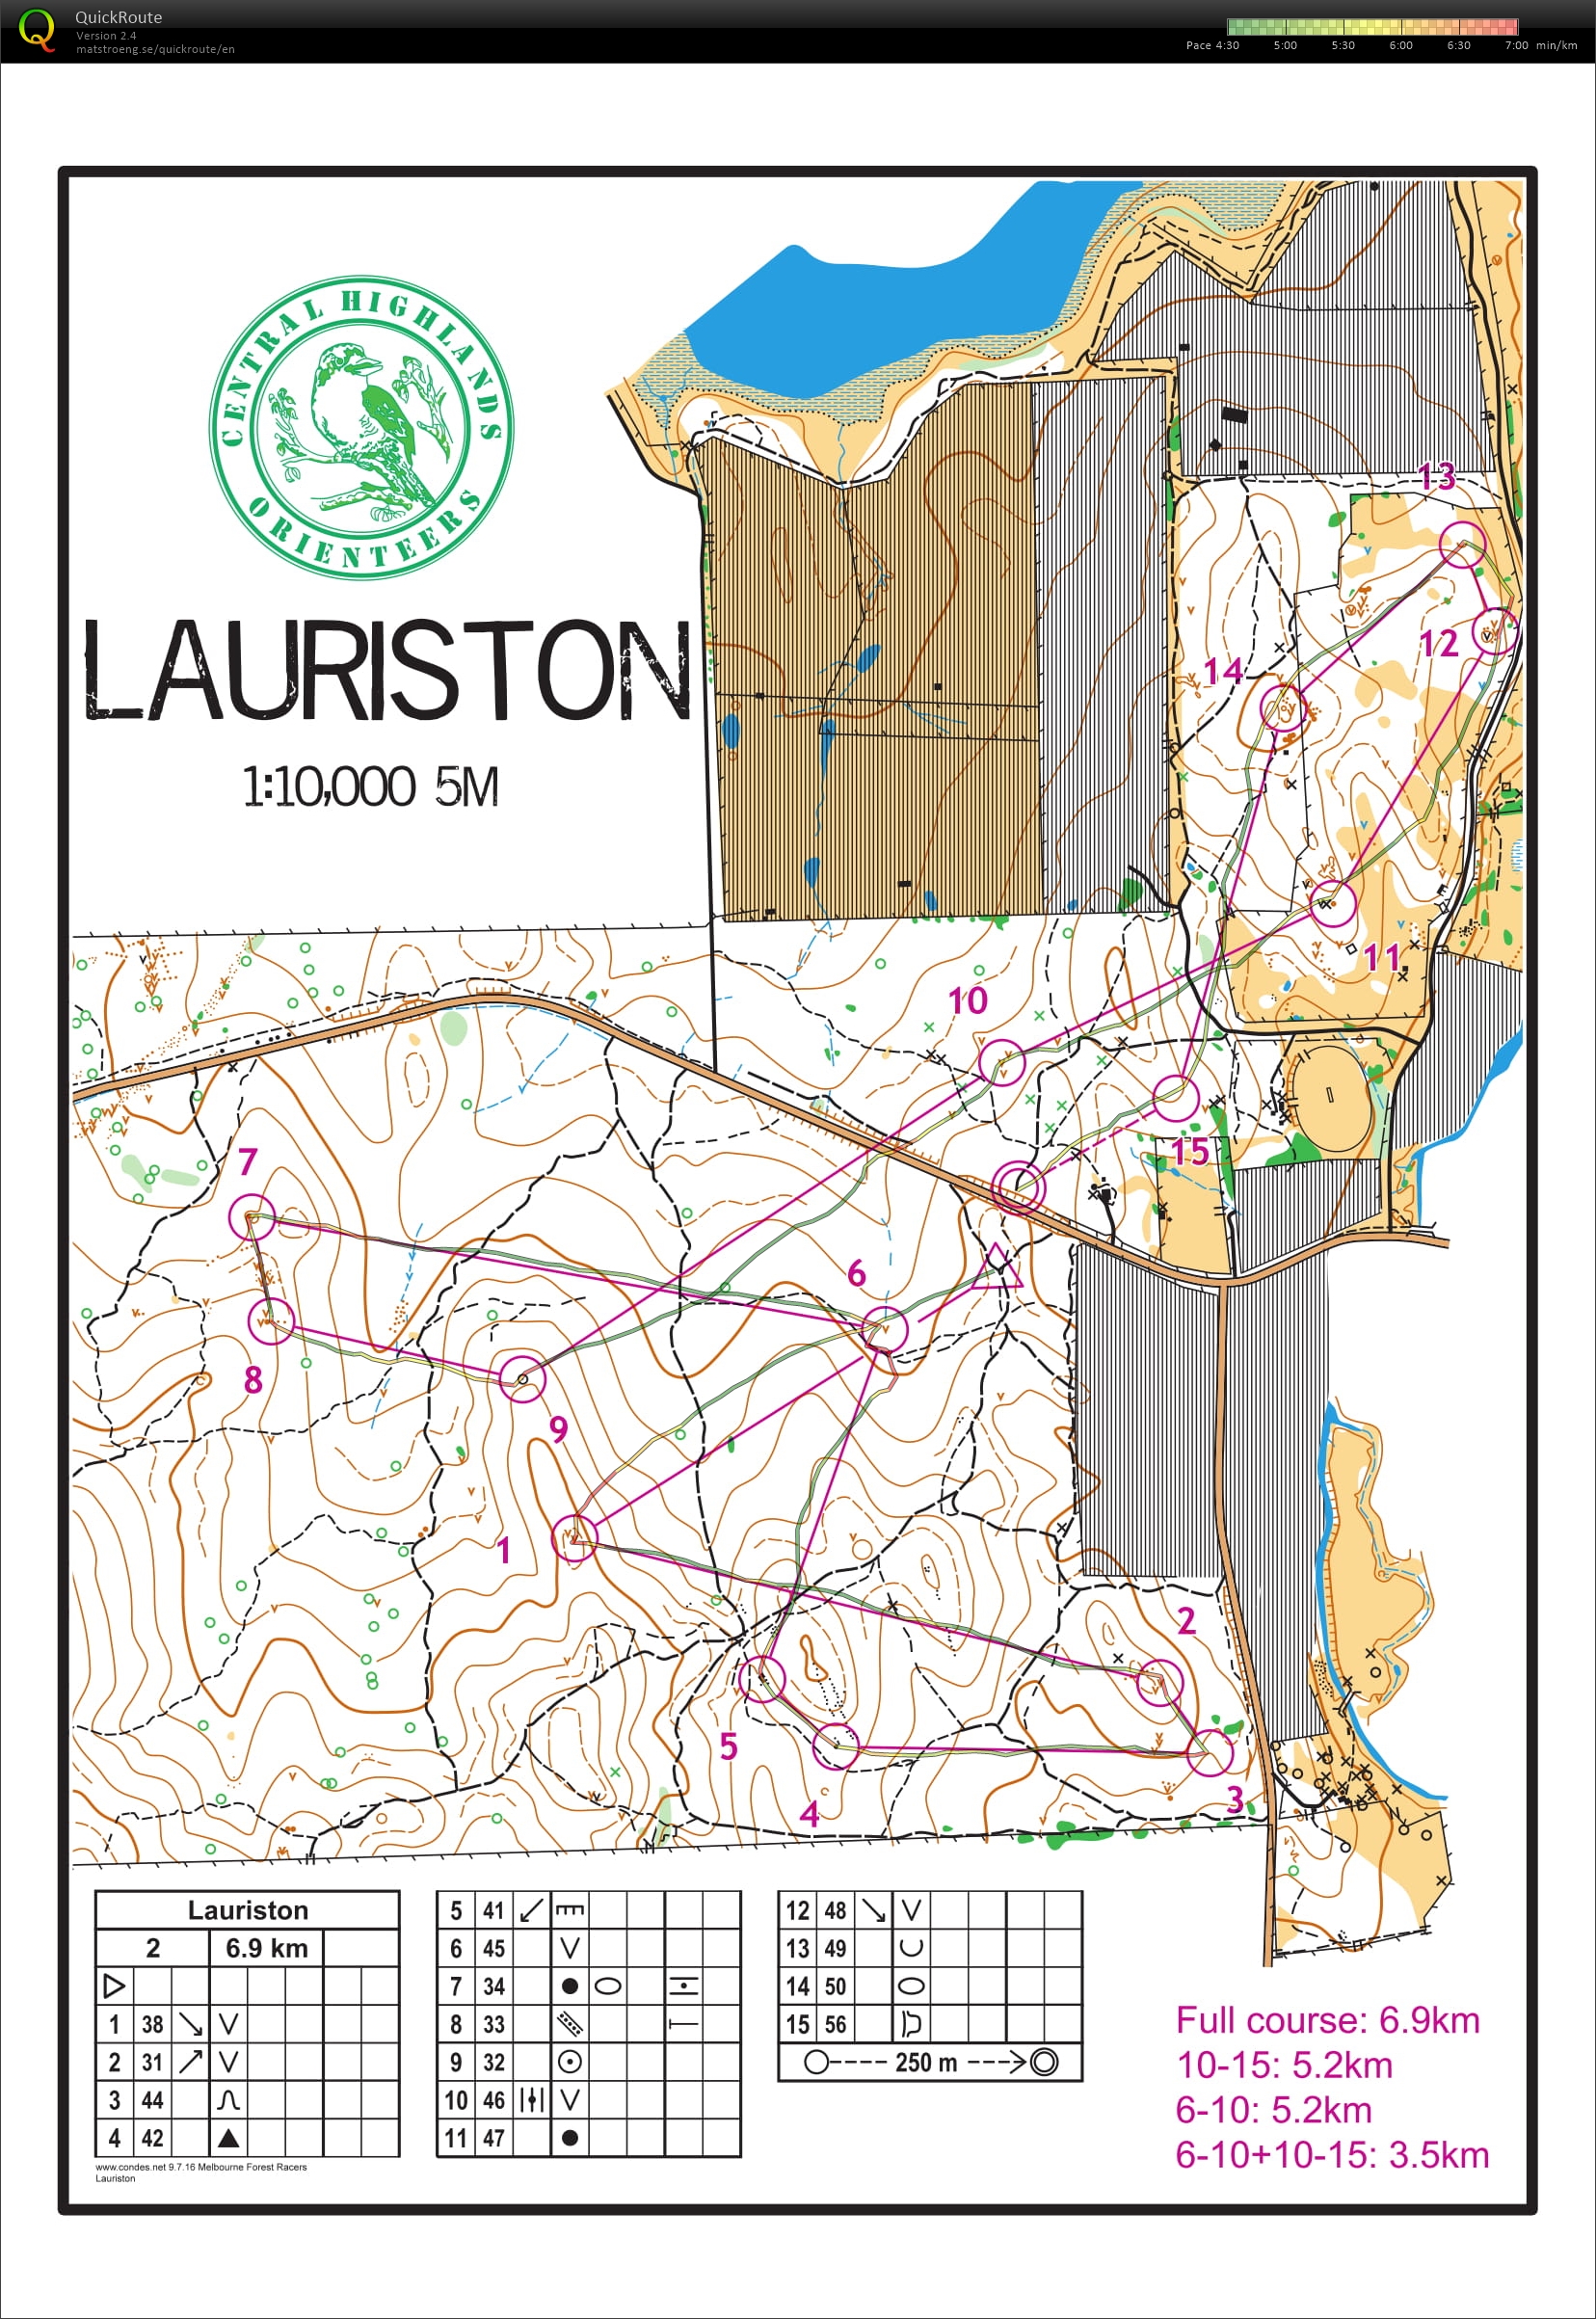 Lauriston easy run (2019-02-09)